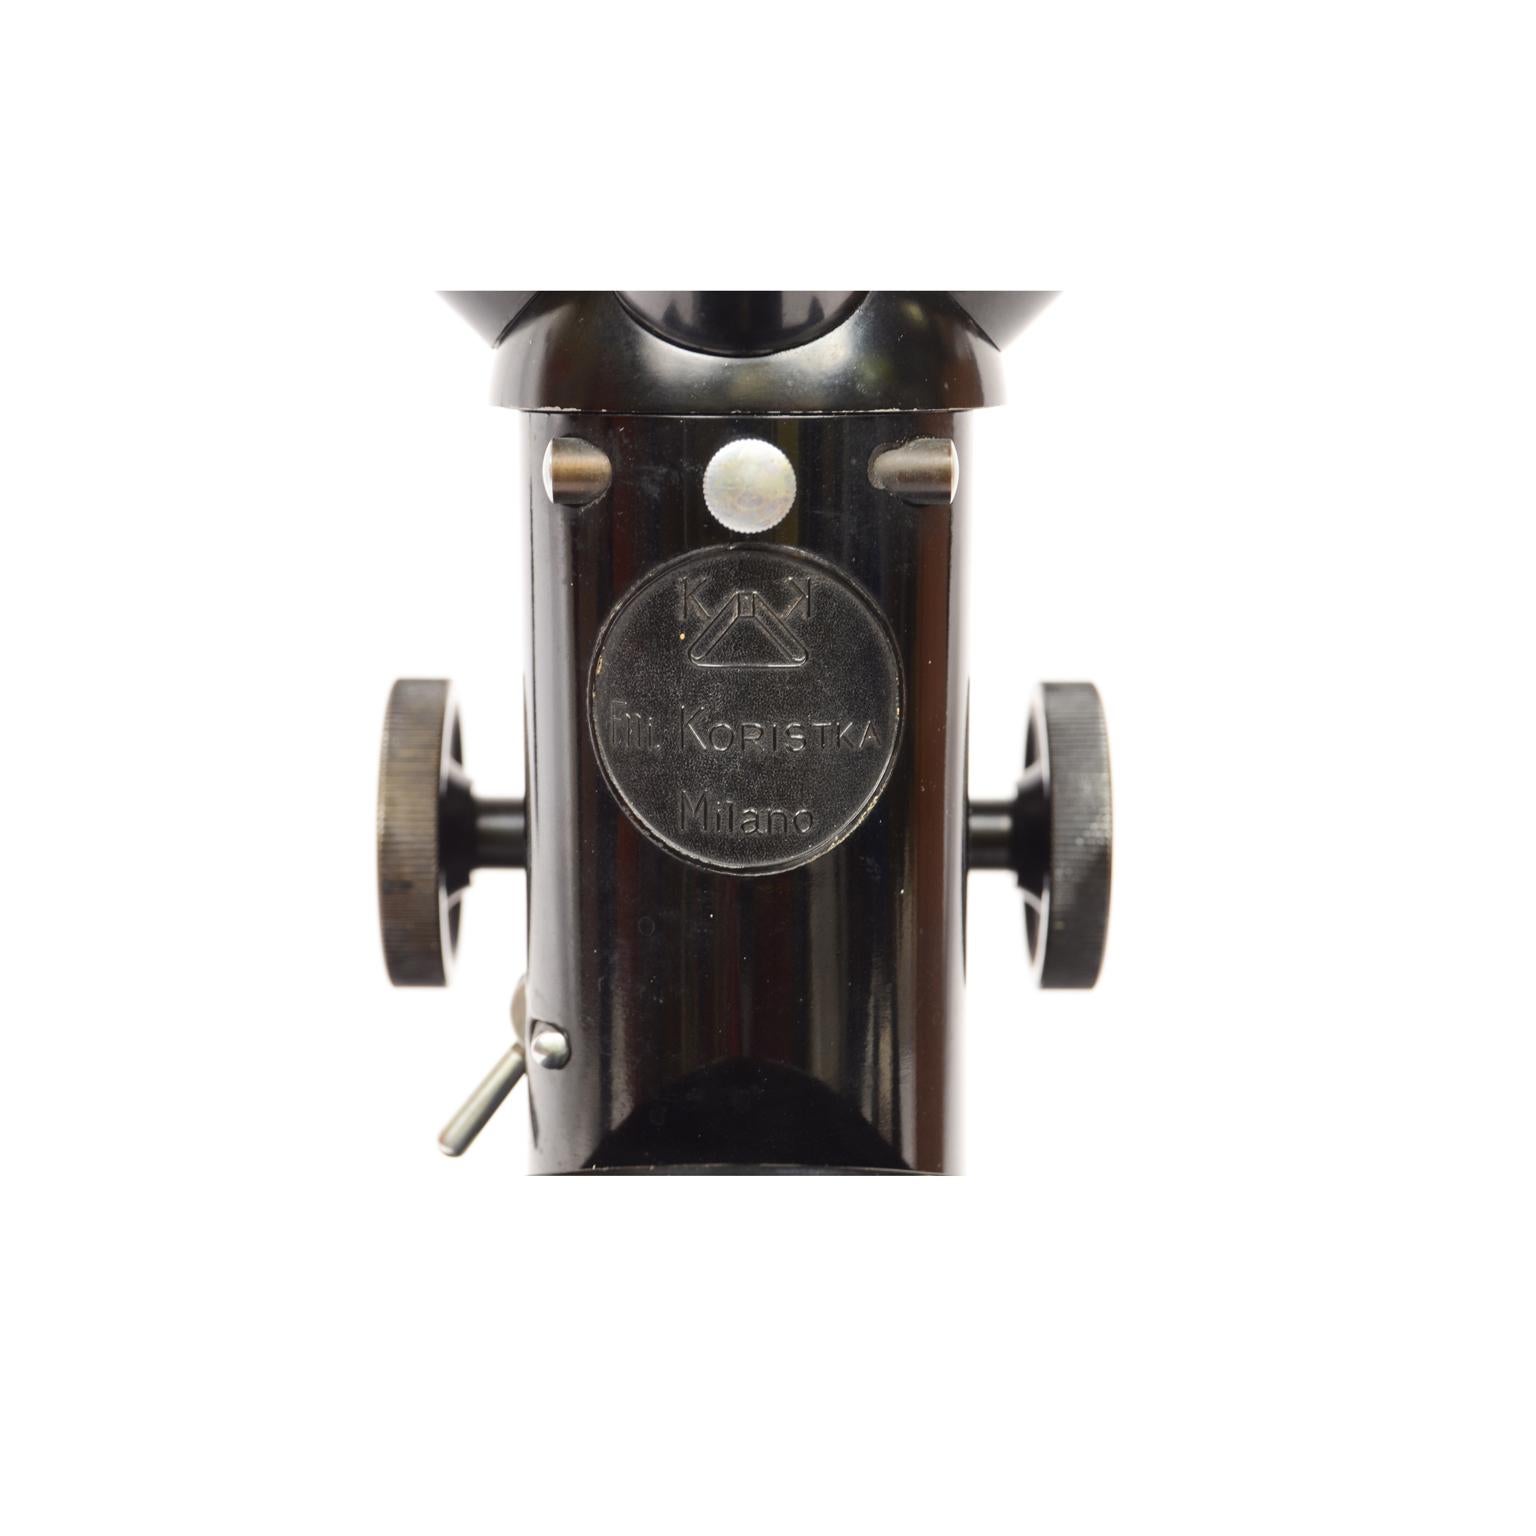 Laiton Microscope ancien de Milan de F.lli Koristka 1910/20  Boîte en bois avec accessoires en vente